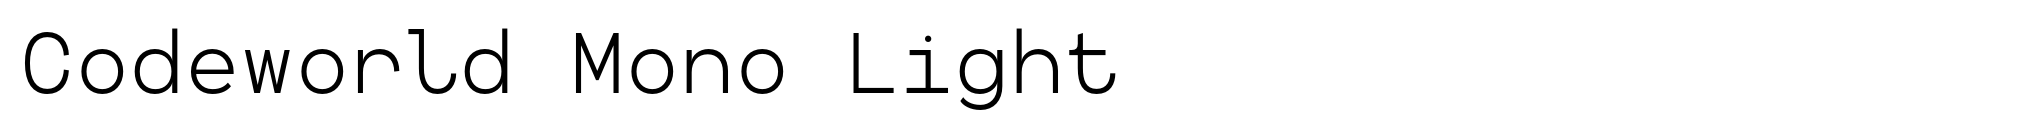 Codeworld Mono Light image